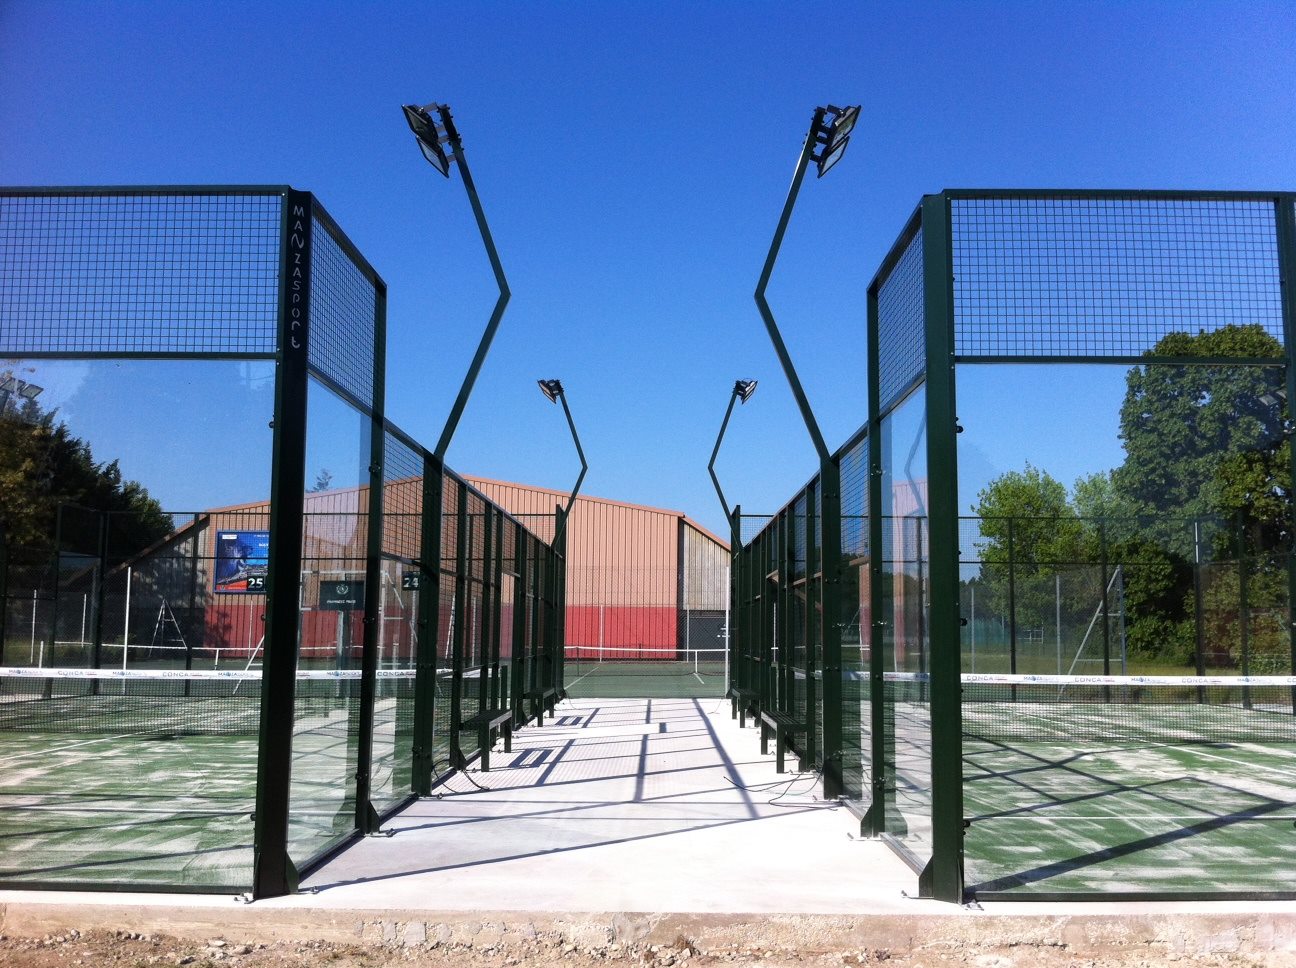 Tennis Club de Lyon erbjuder 2 paddelbanor